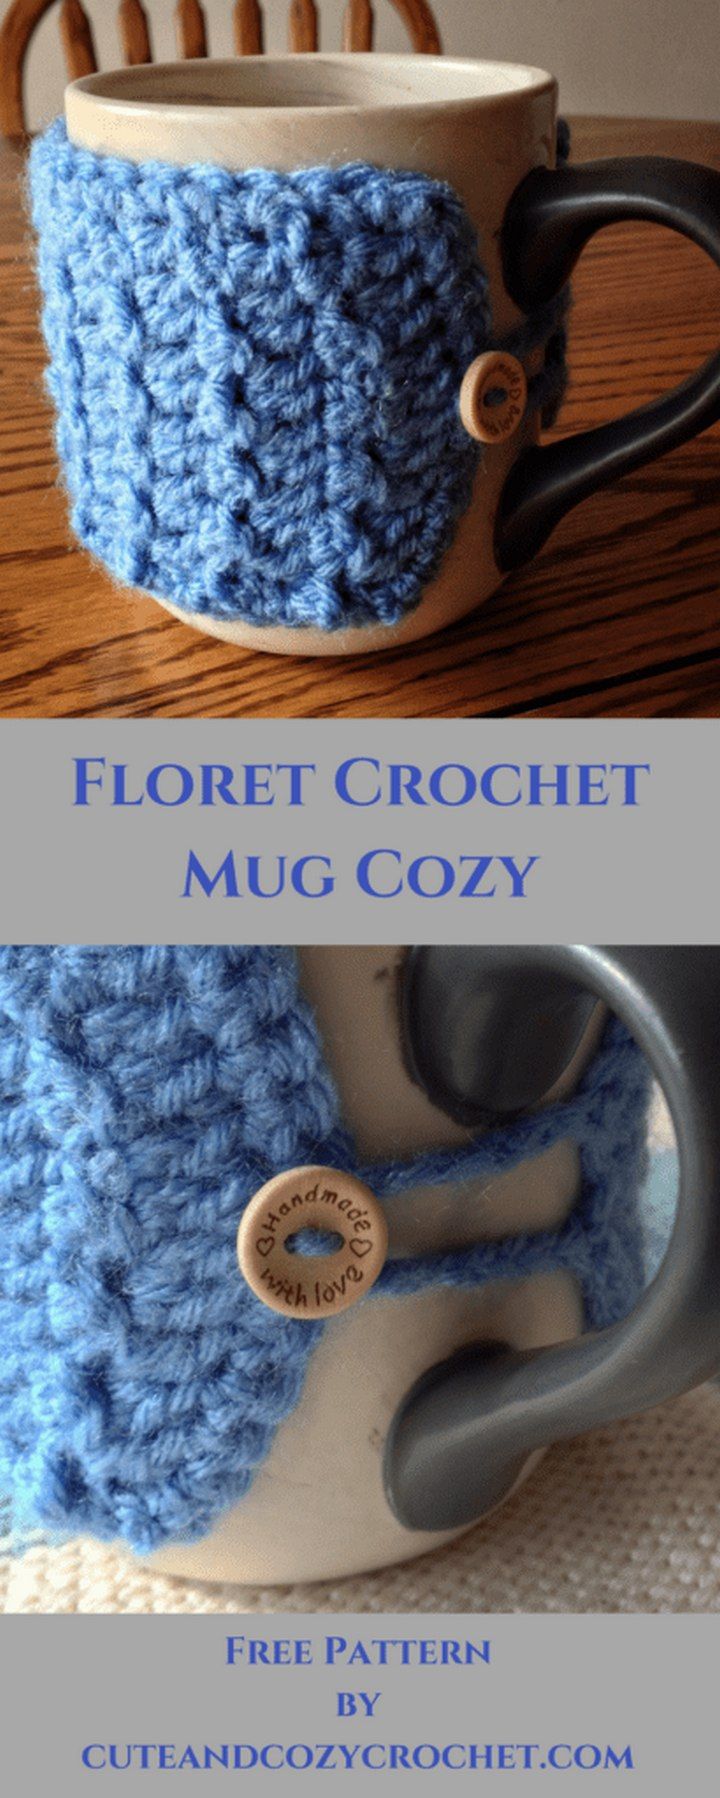 Crochet Floret Crochet Mug Cozy